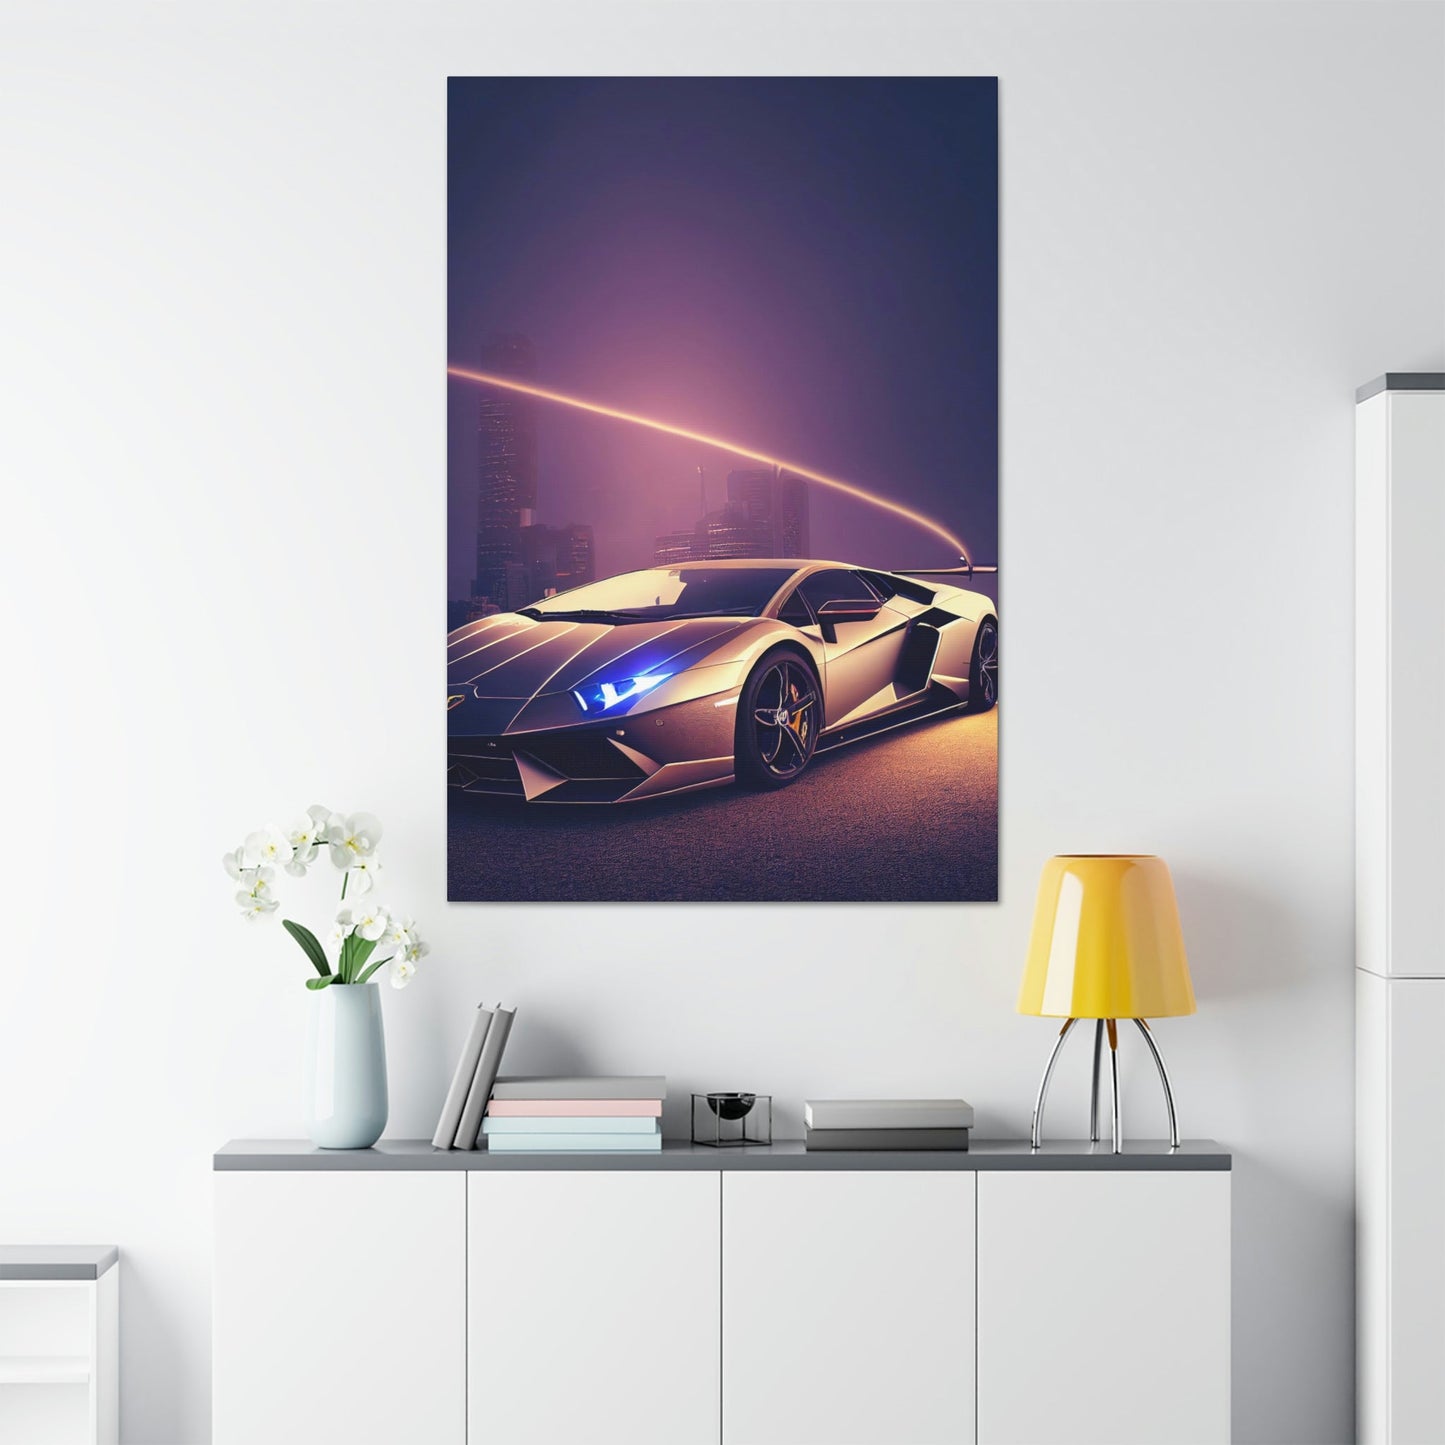 Sleek Supercar Beauty: Framed Canvas & Poster Print of a Lamborghini